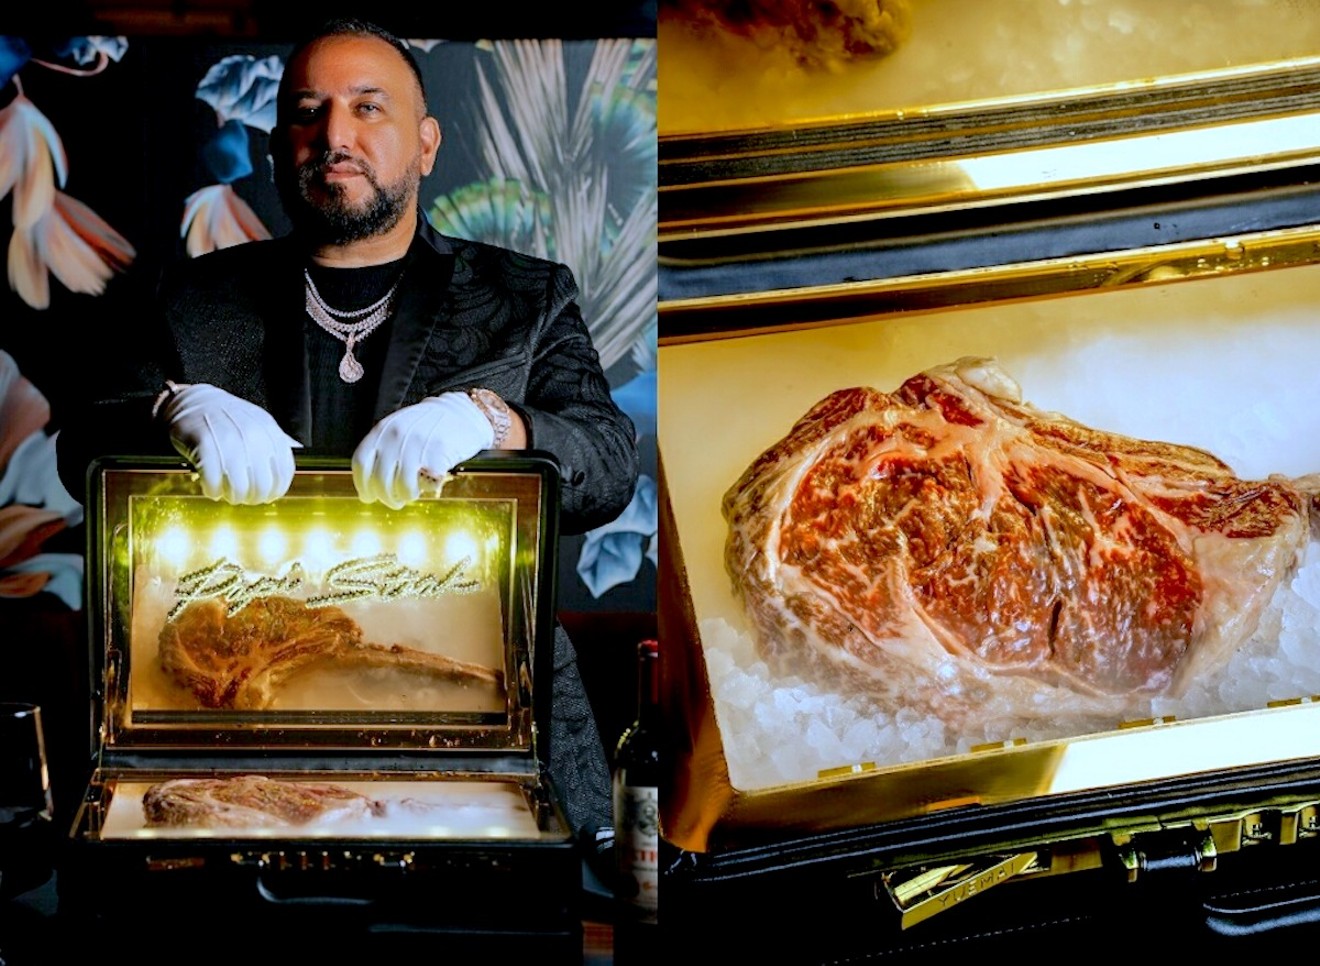 Papi Steak cofounder David "Papi" Einhorn models his steakhouse's $1,000 Beef Case.